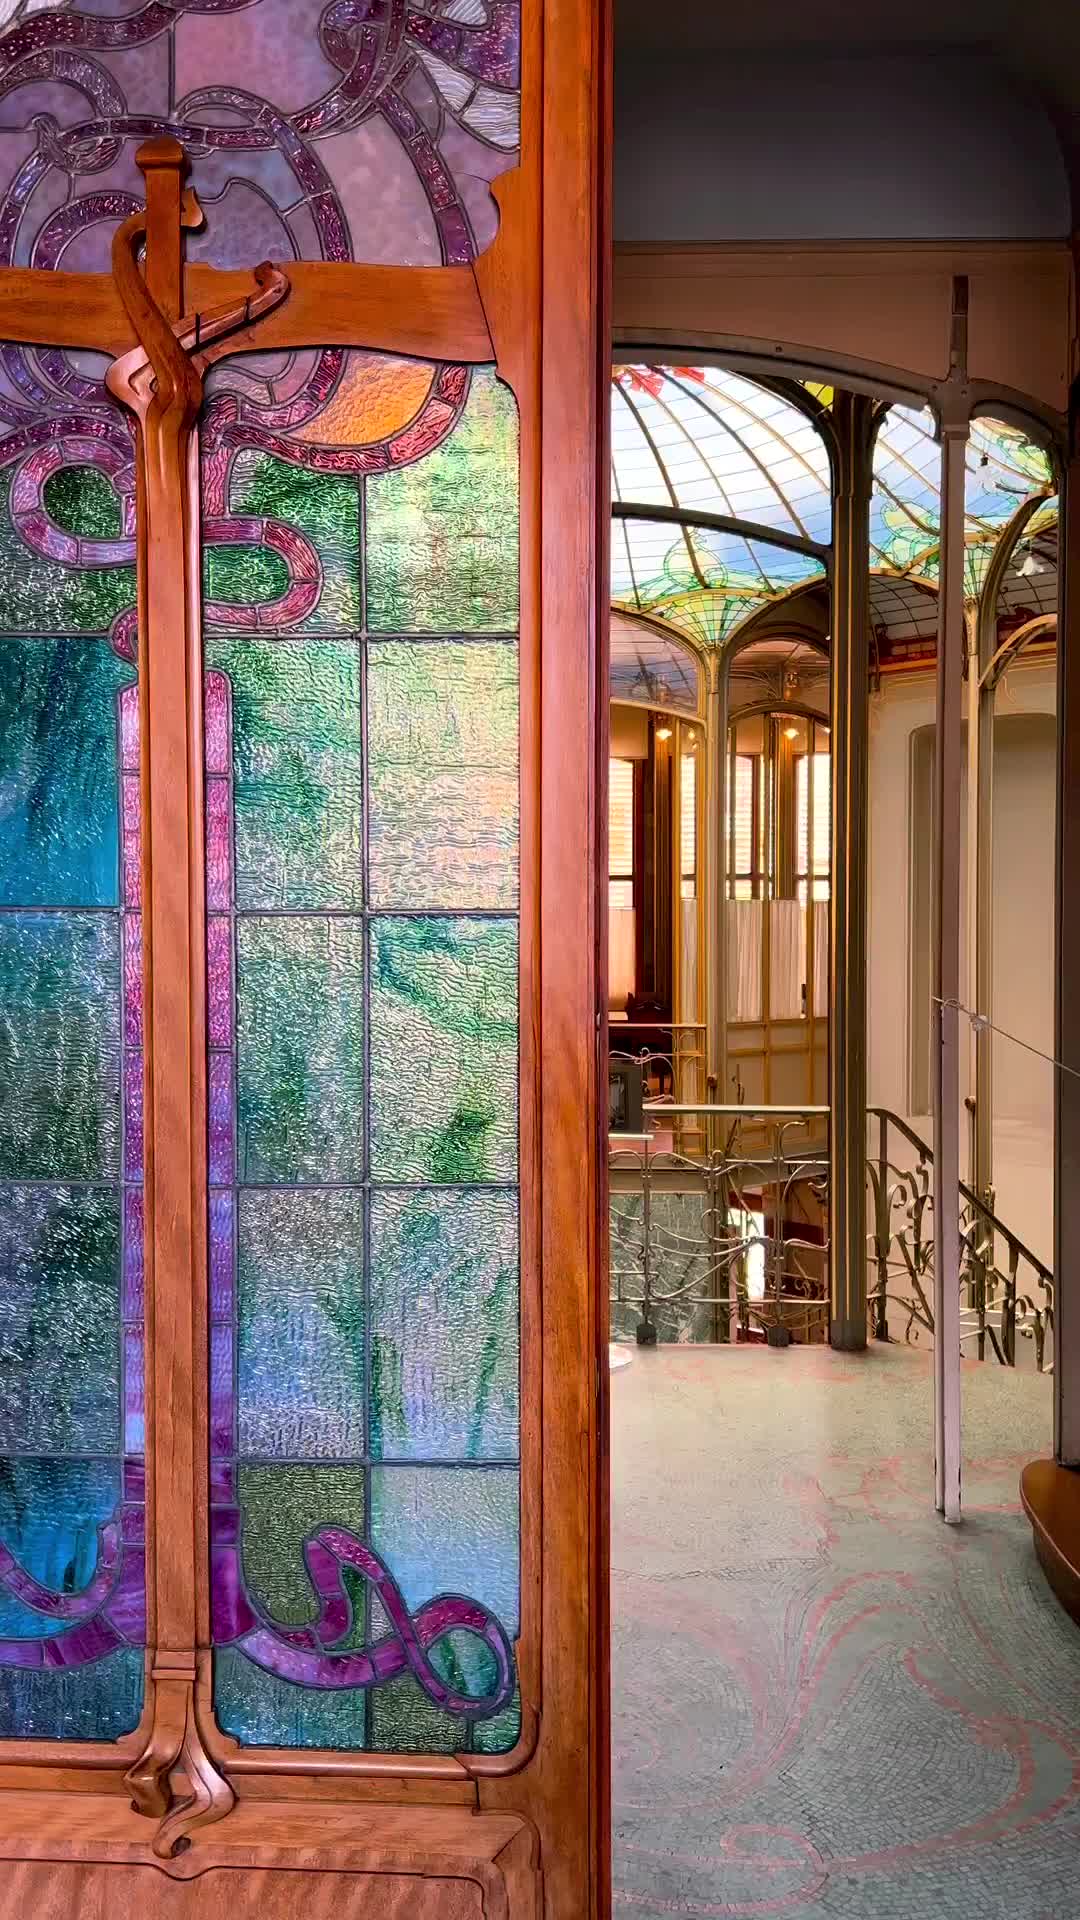 Explore Hotel van Eetvelde: Horta's 1895 Masterpiece